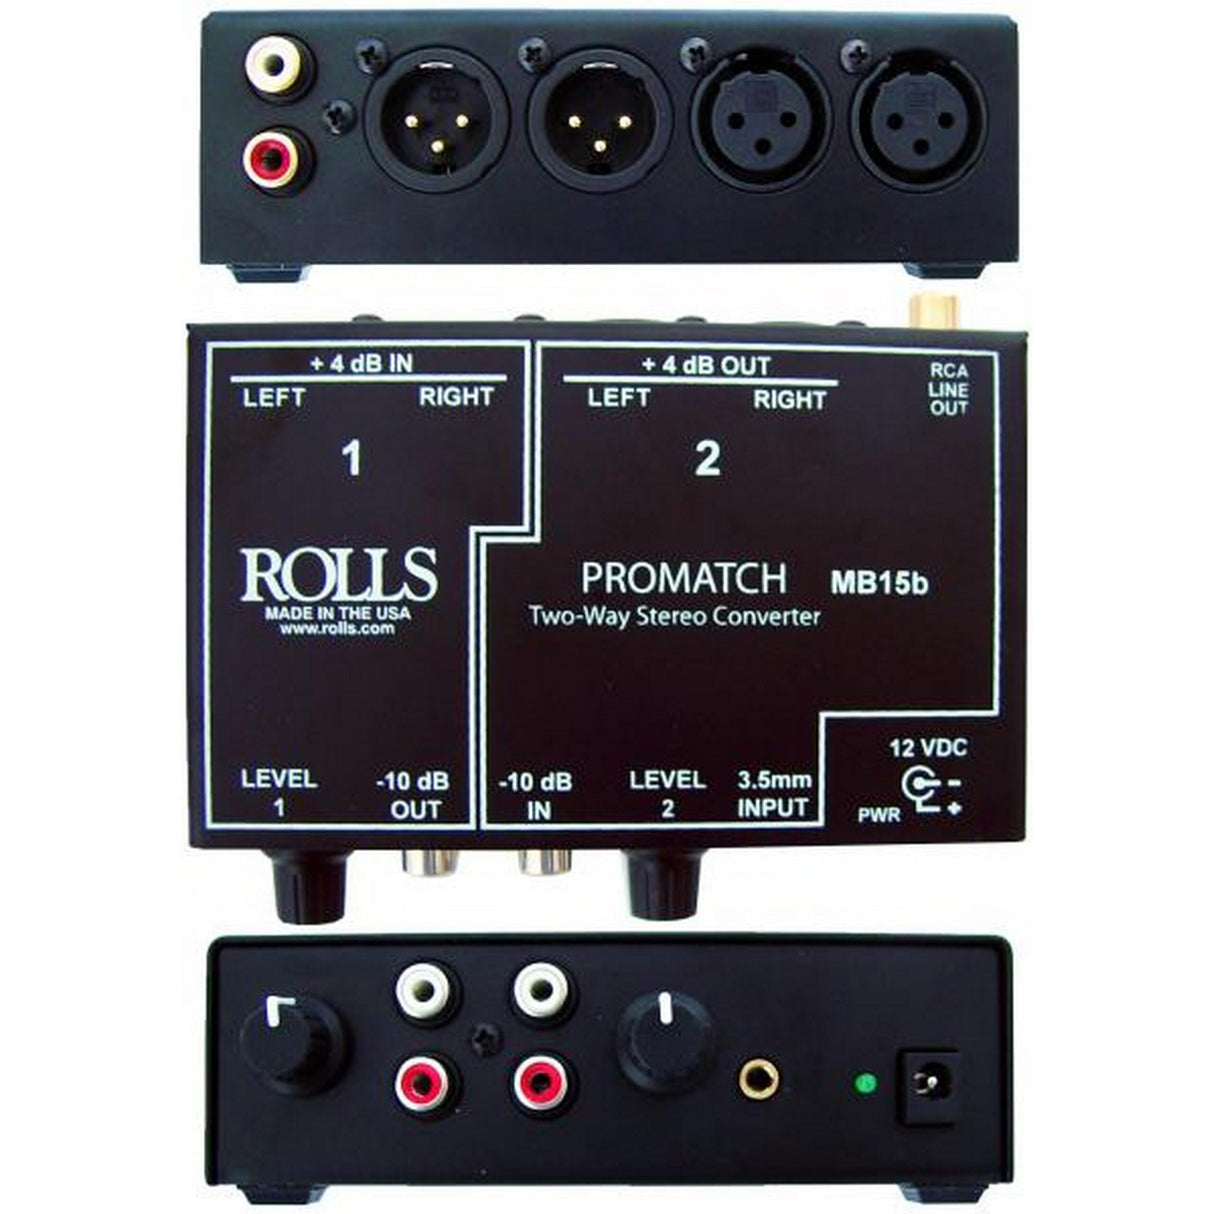 Rolls MB15b Promatch 2-Way Stereo Converter